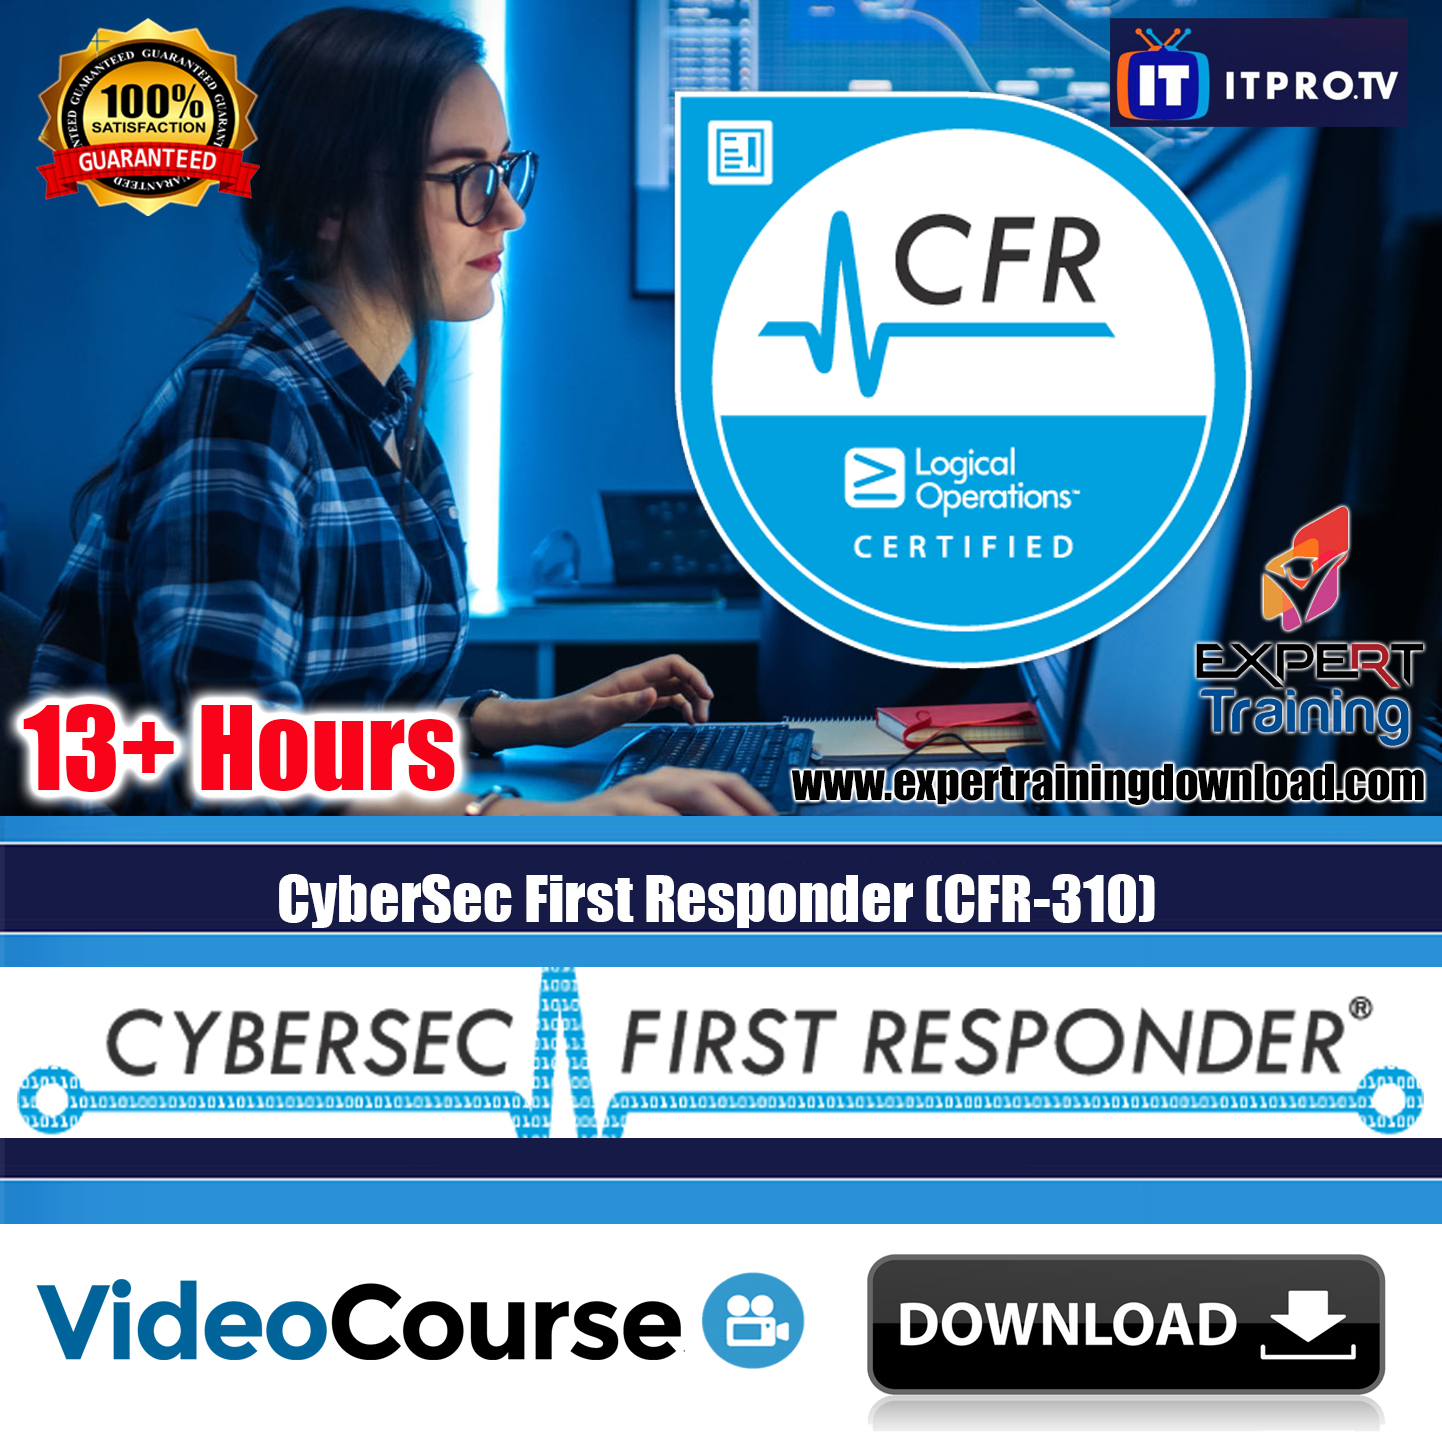 CyberSec First Responder (CFR-310)